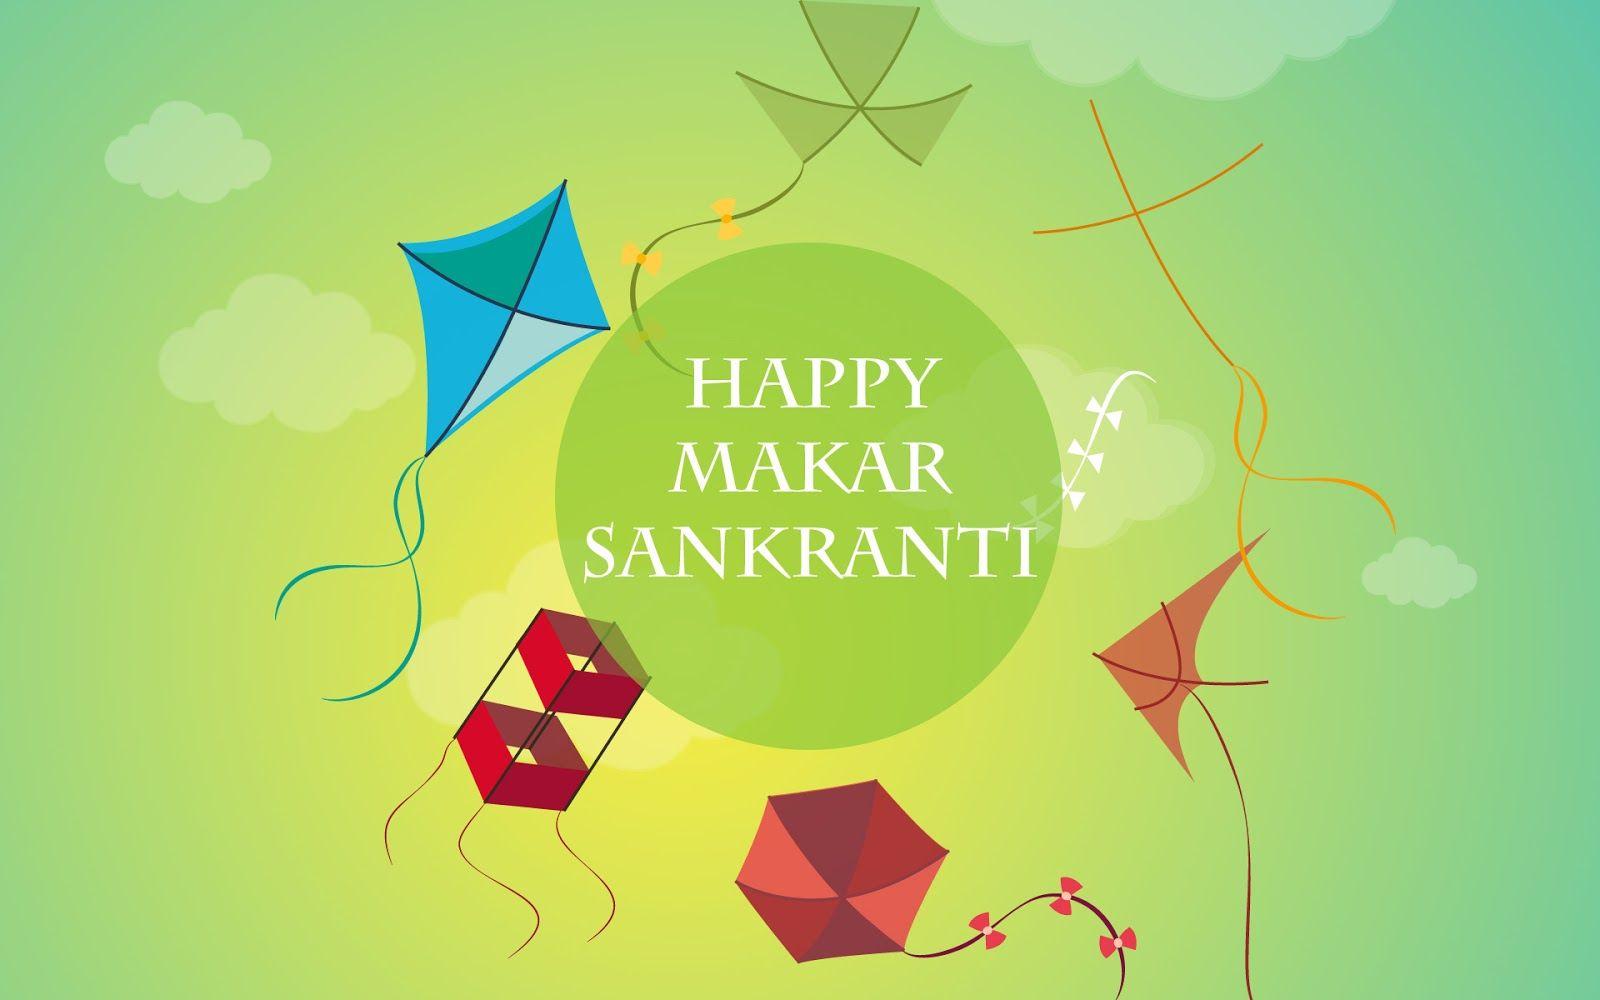 Happy Makar Sankranti Wallpaper in HD FREE Downlaod Photo